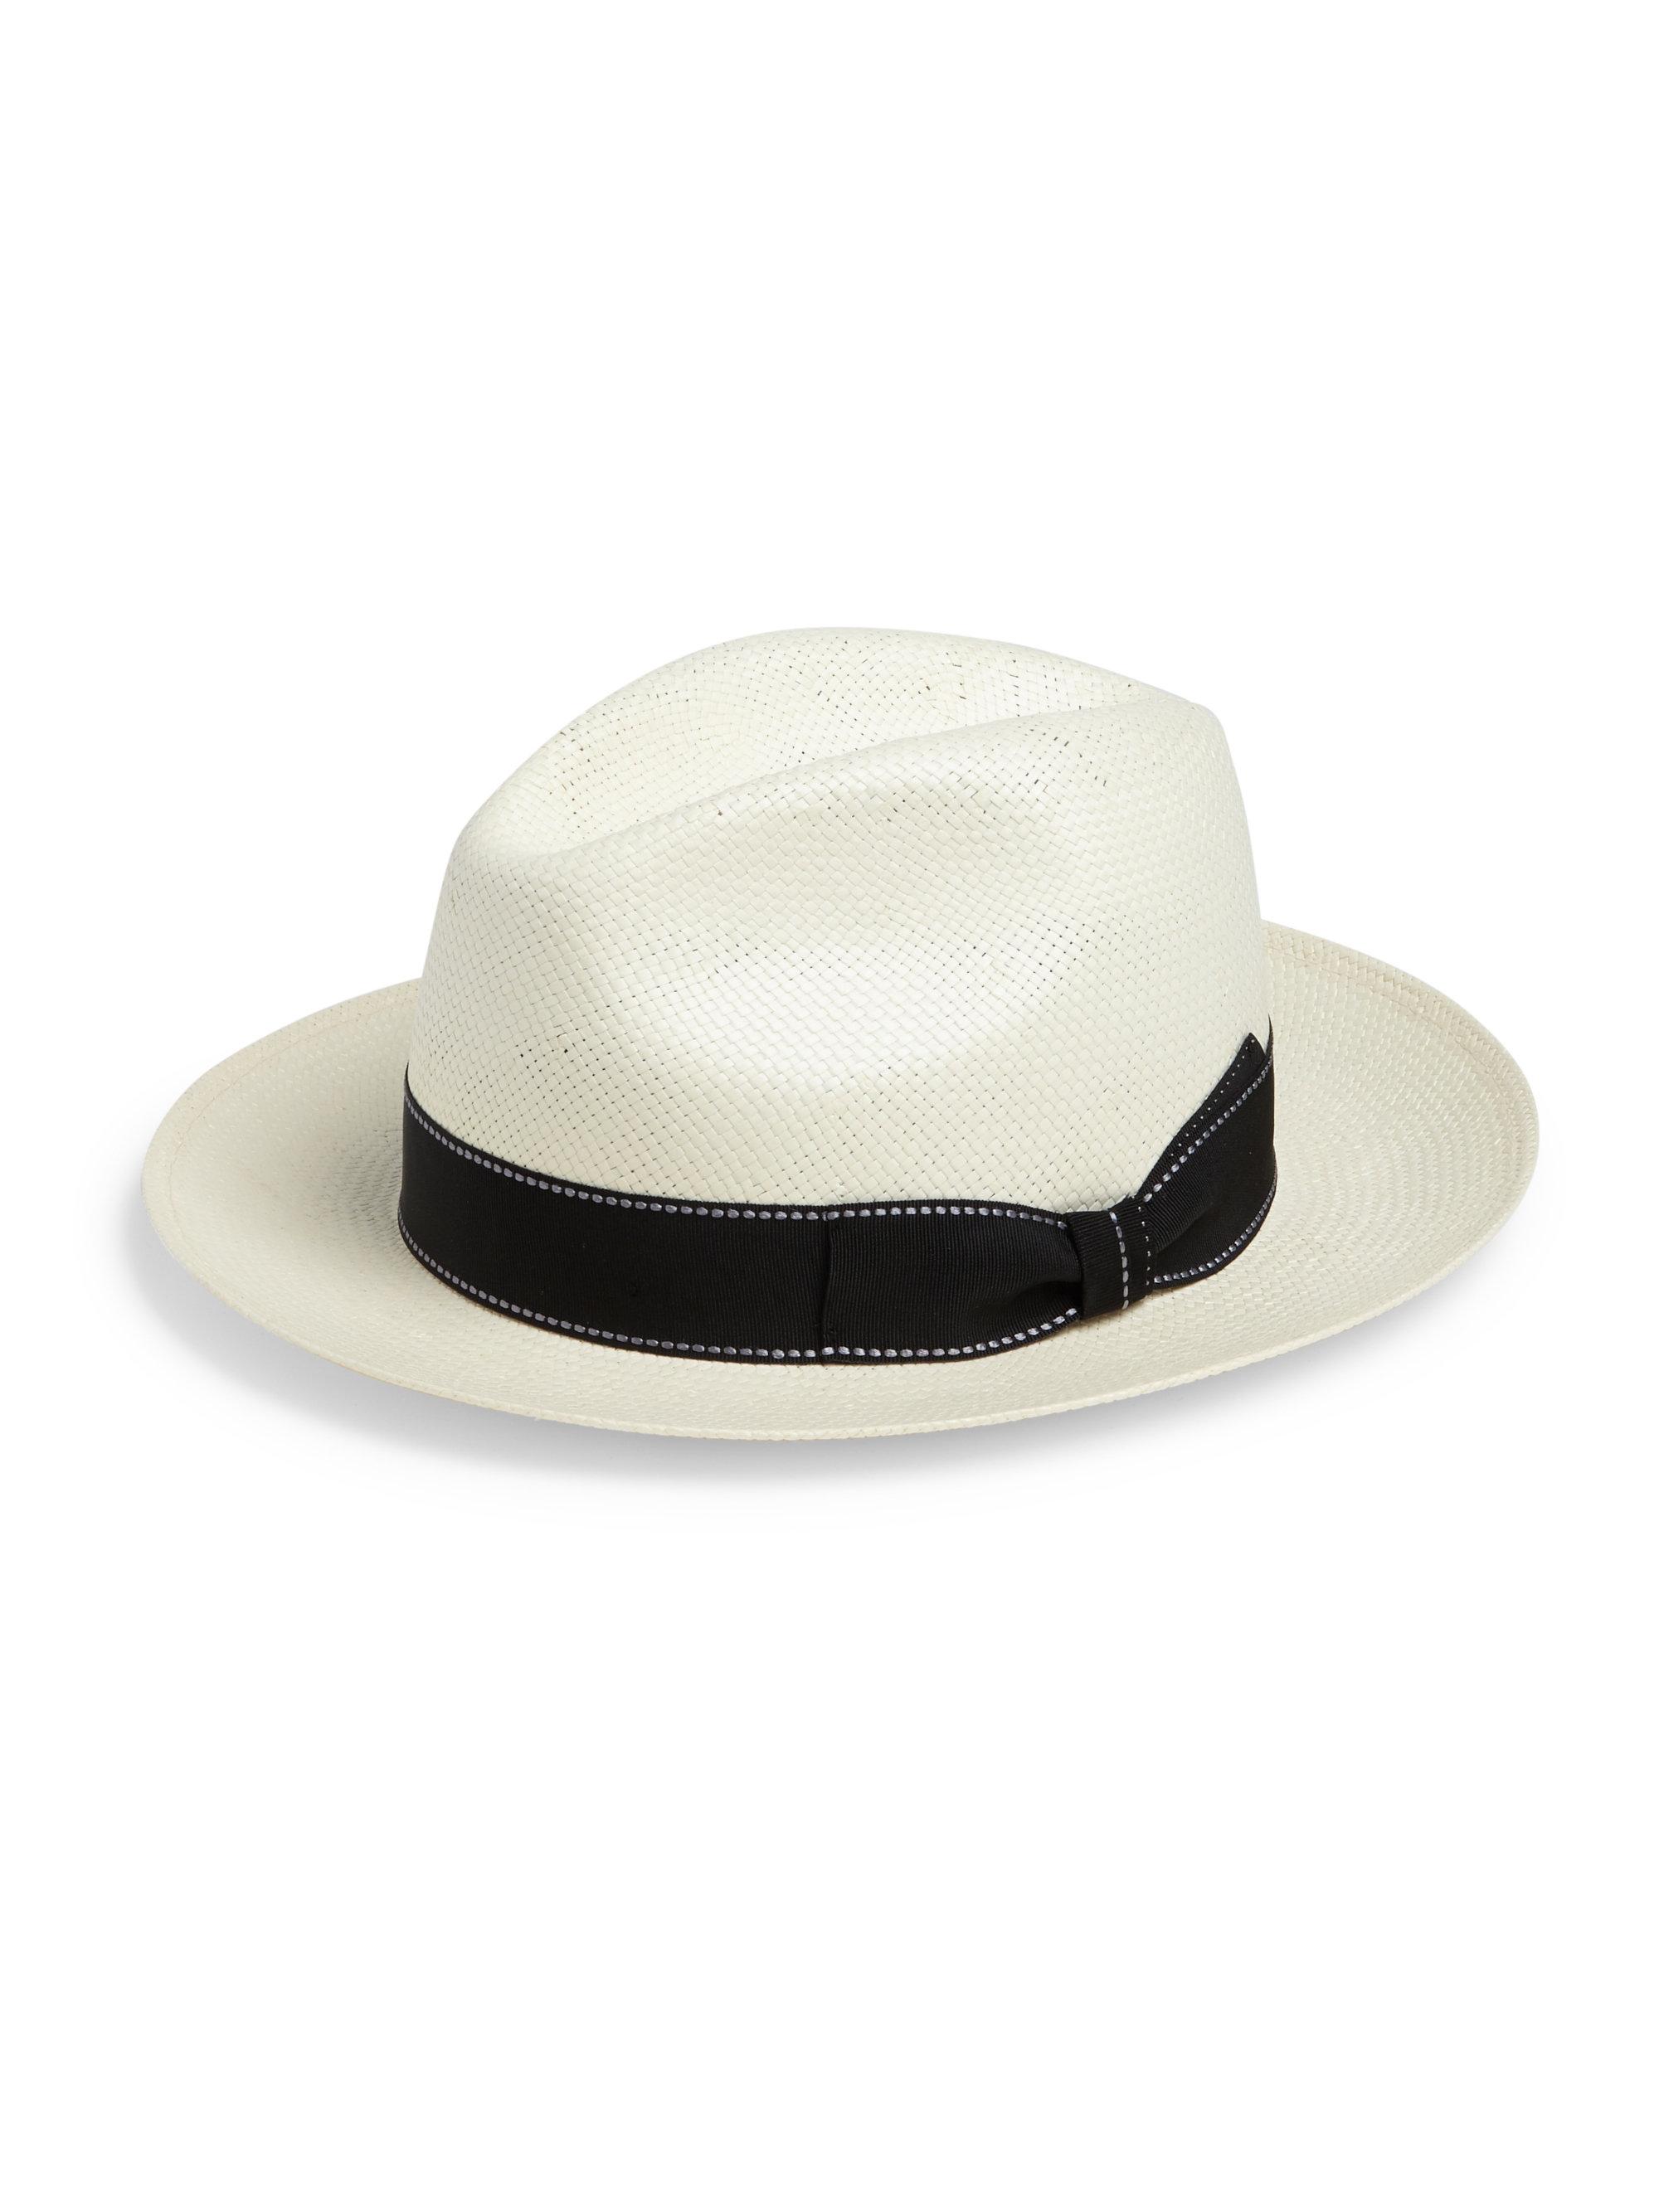 Toyo straw ombre panama hat